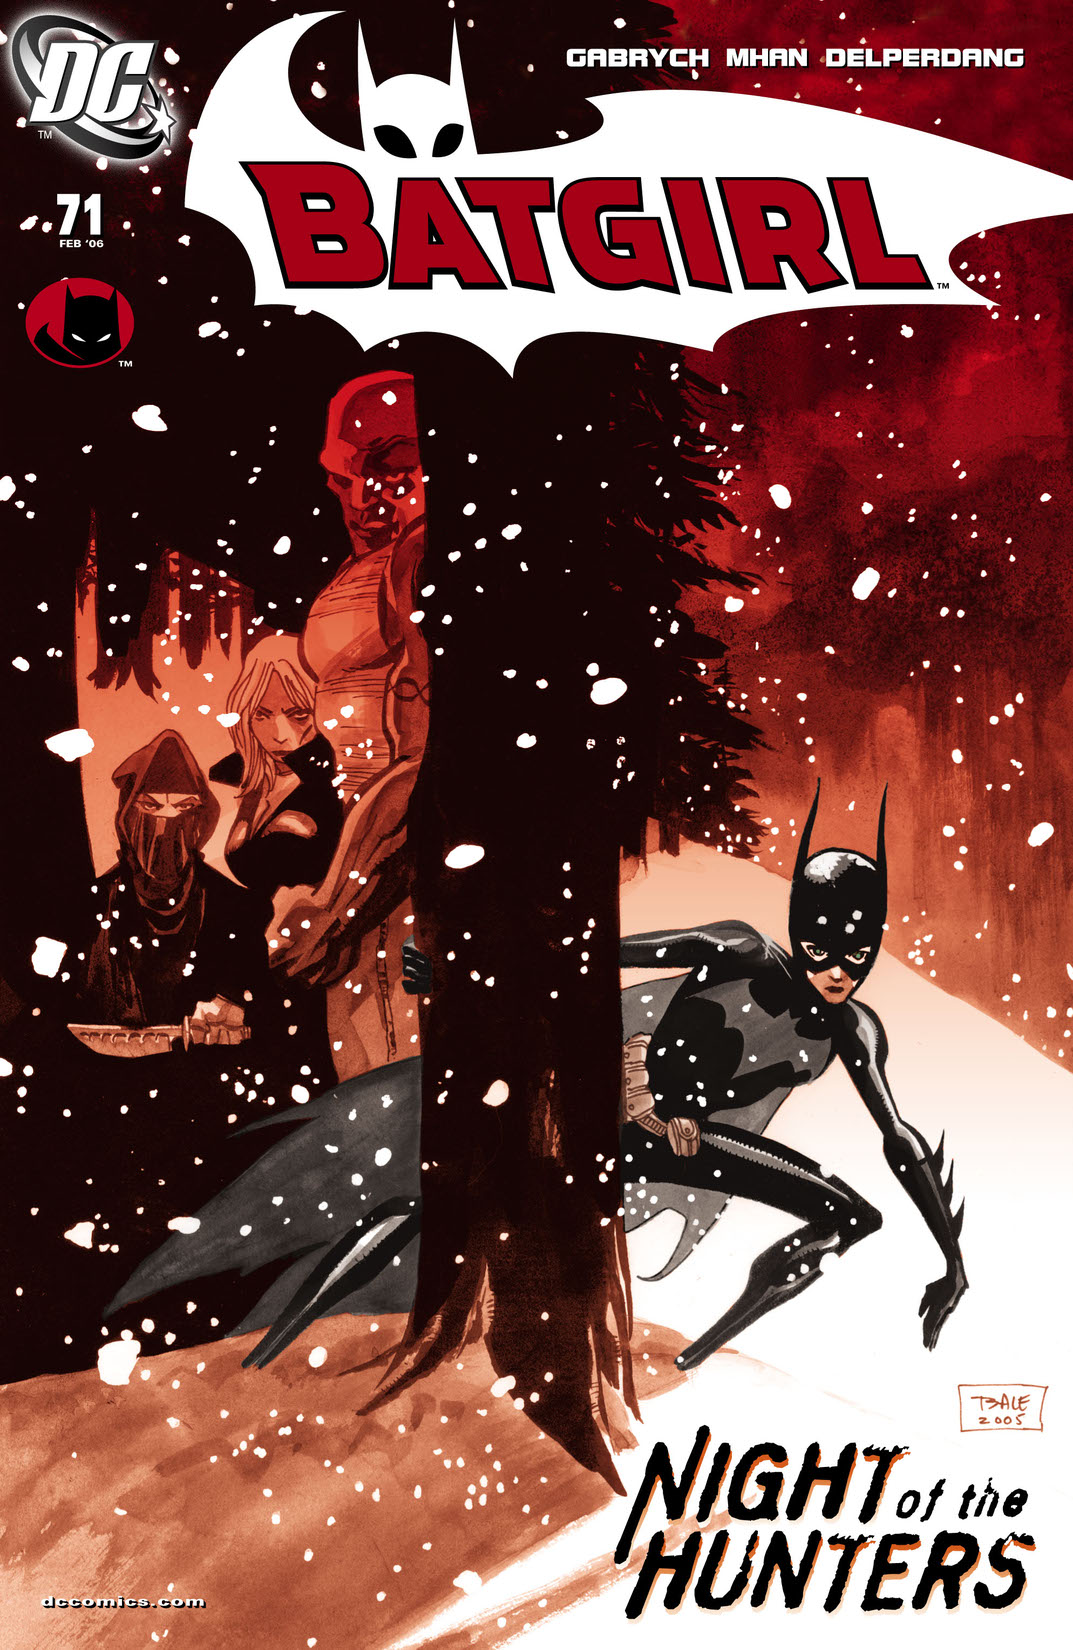 Batgirl (2000-) #71 preview images